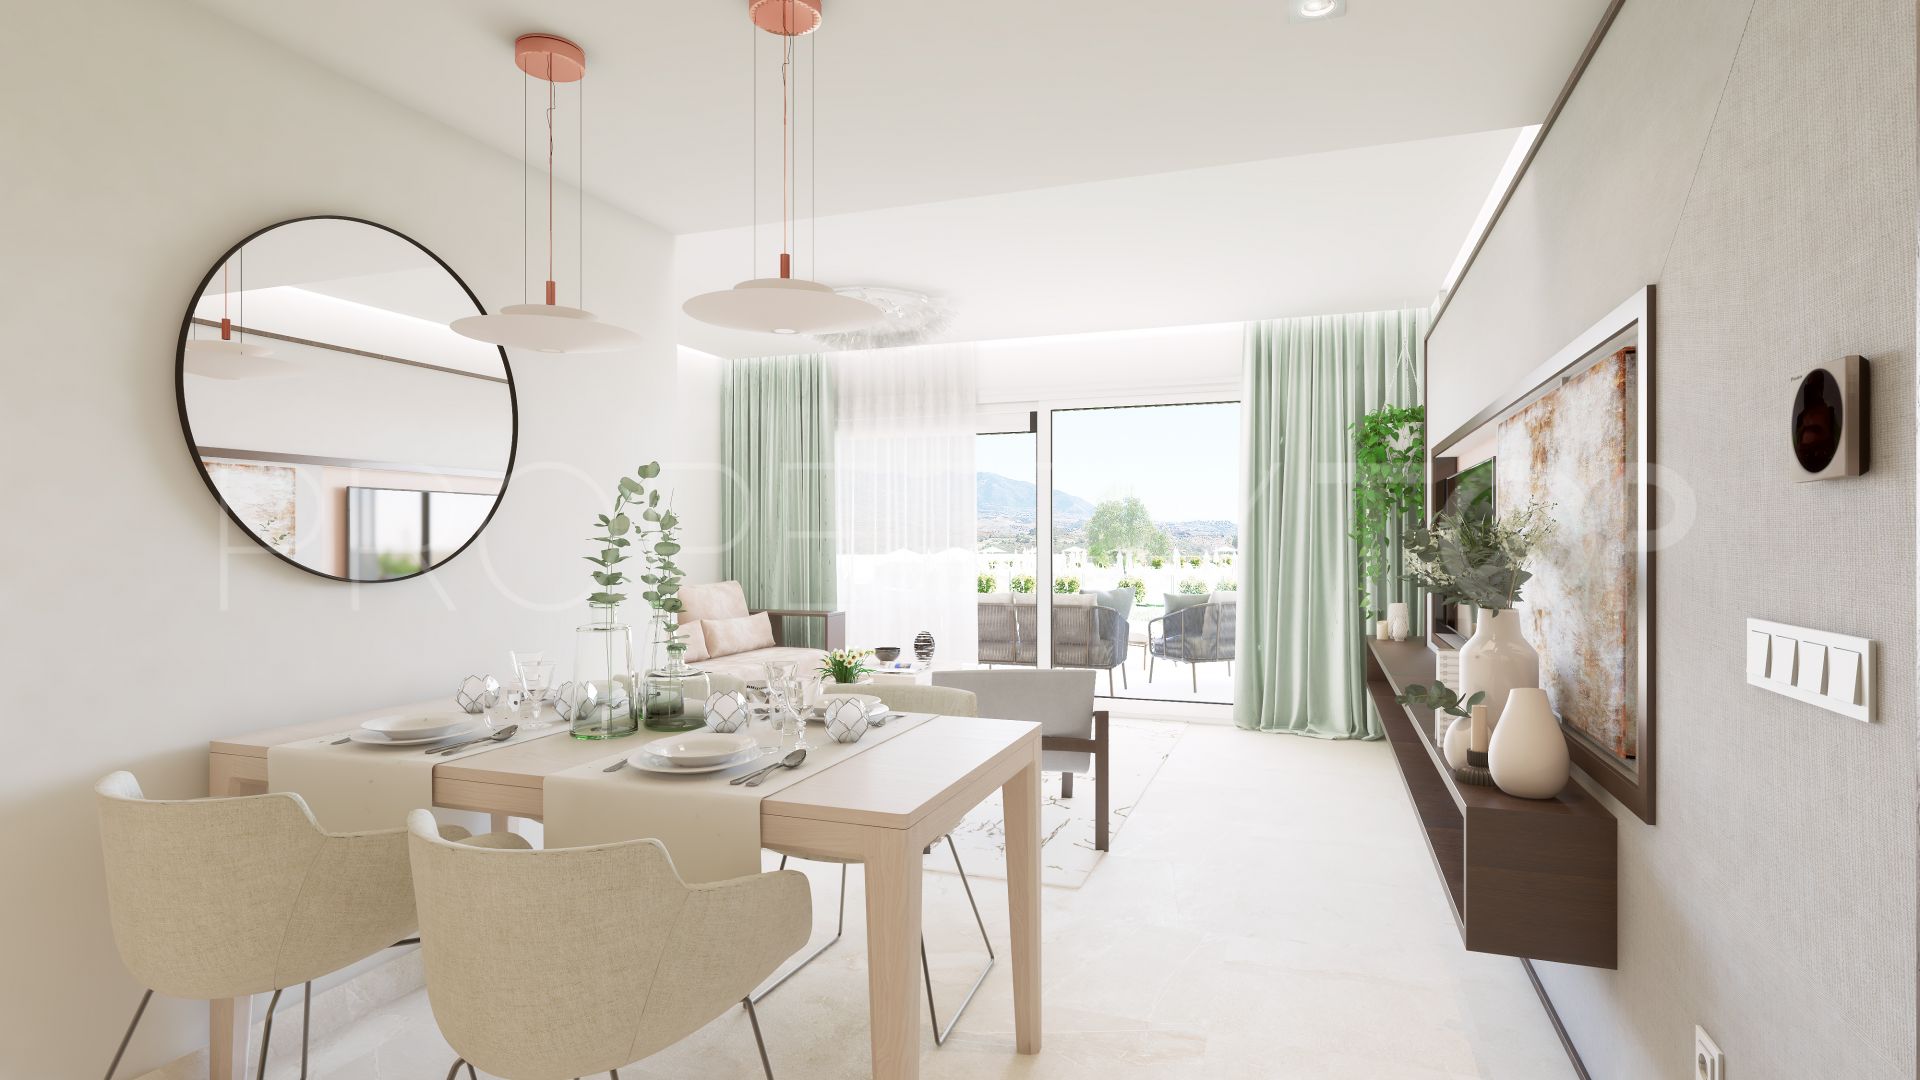 Ground floor apartment in La Cala Golf Resort for sale